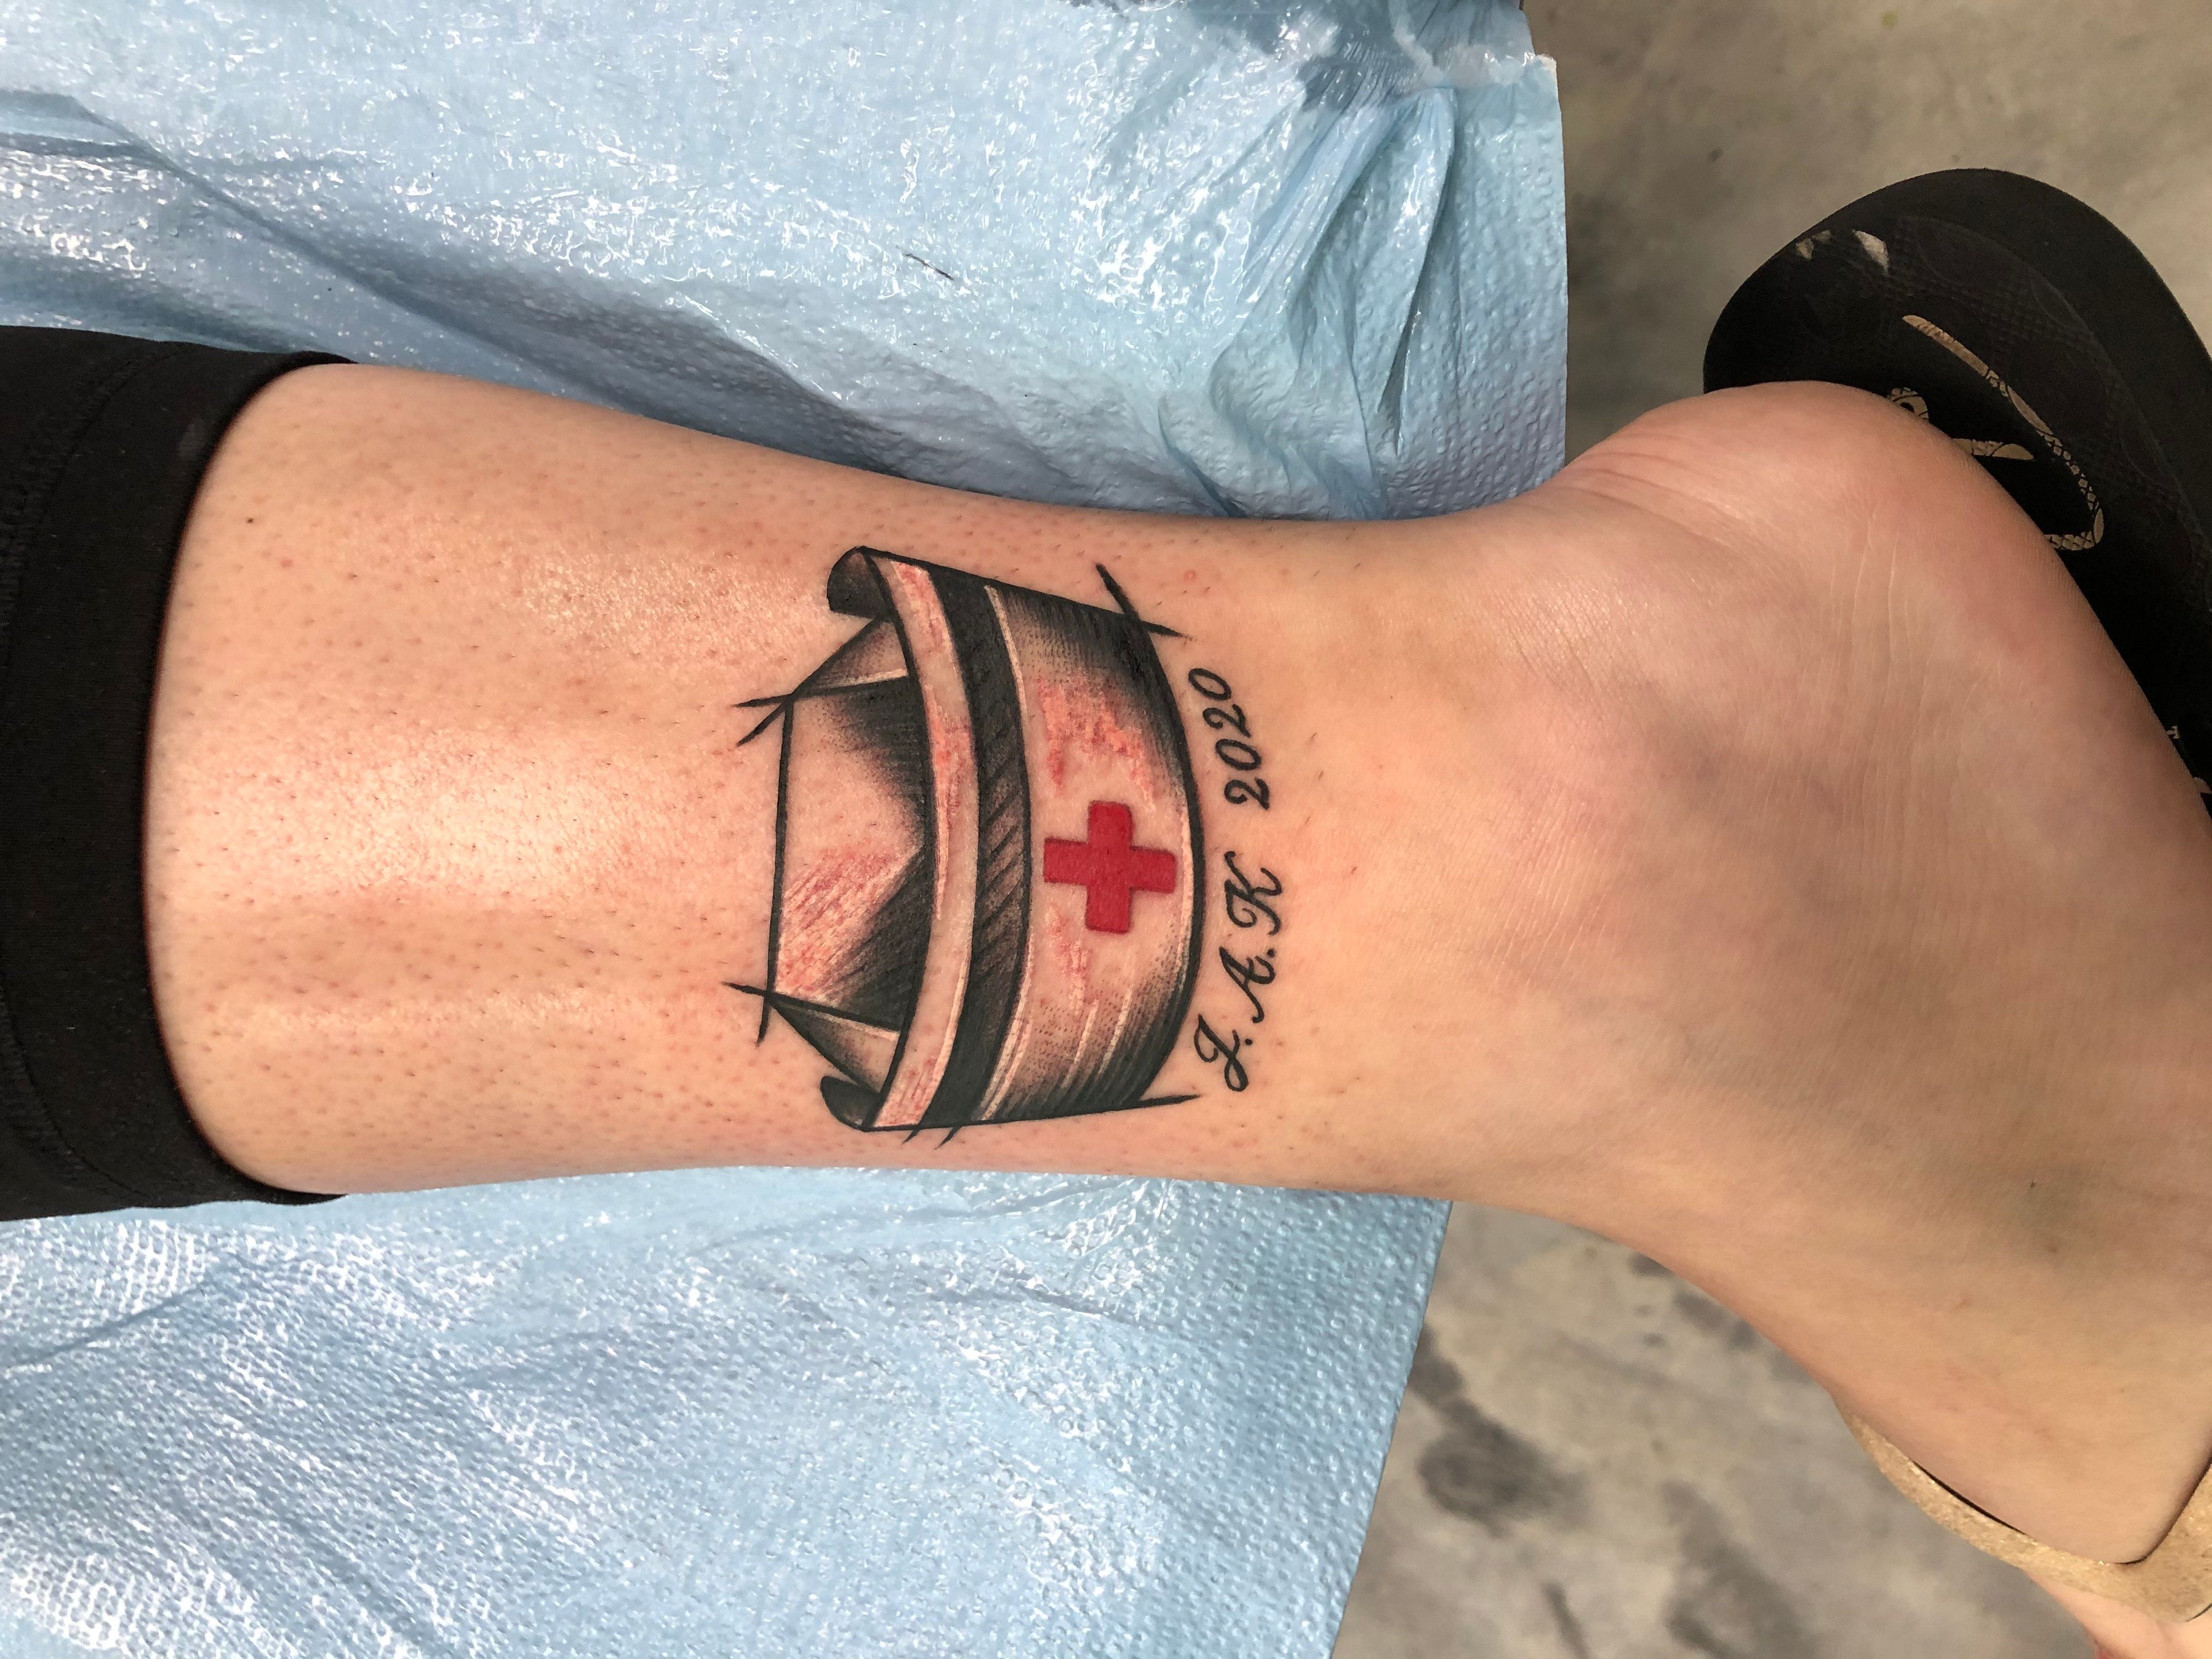 Nurse Hat 2020 Tattoo